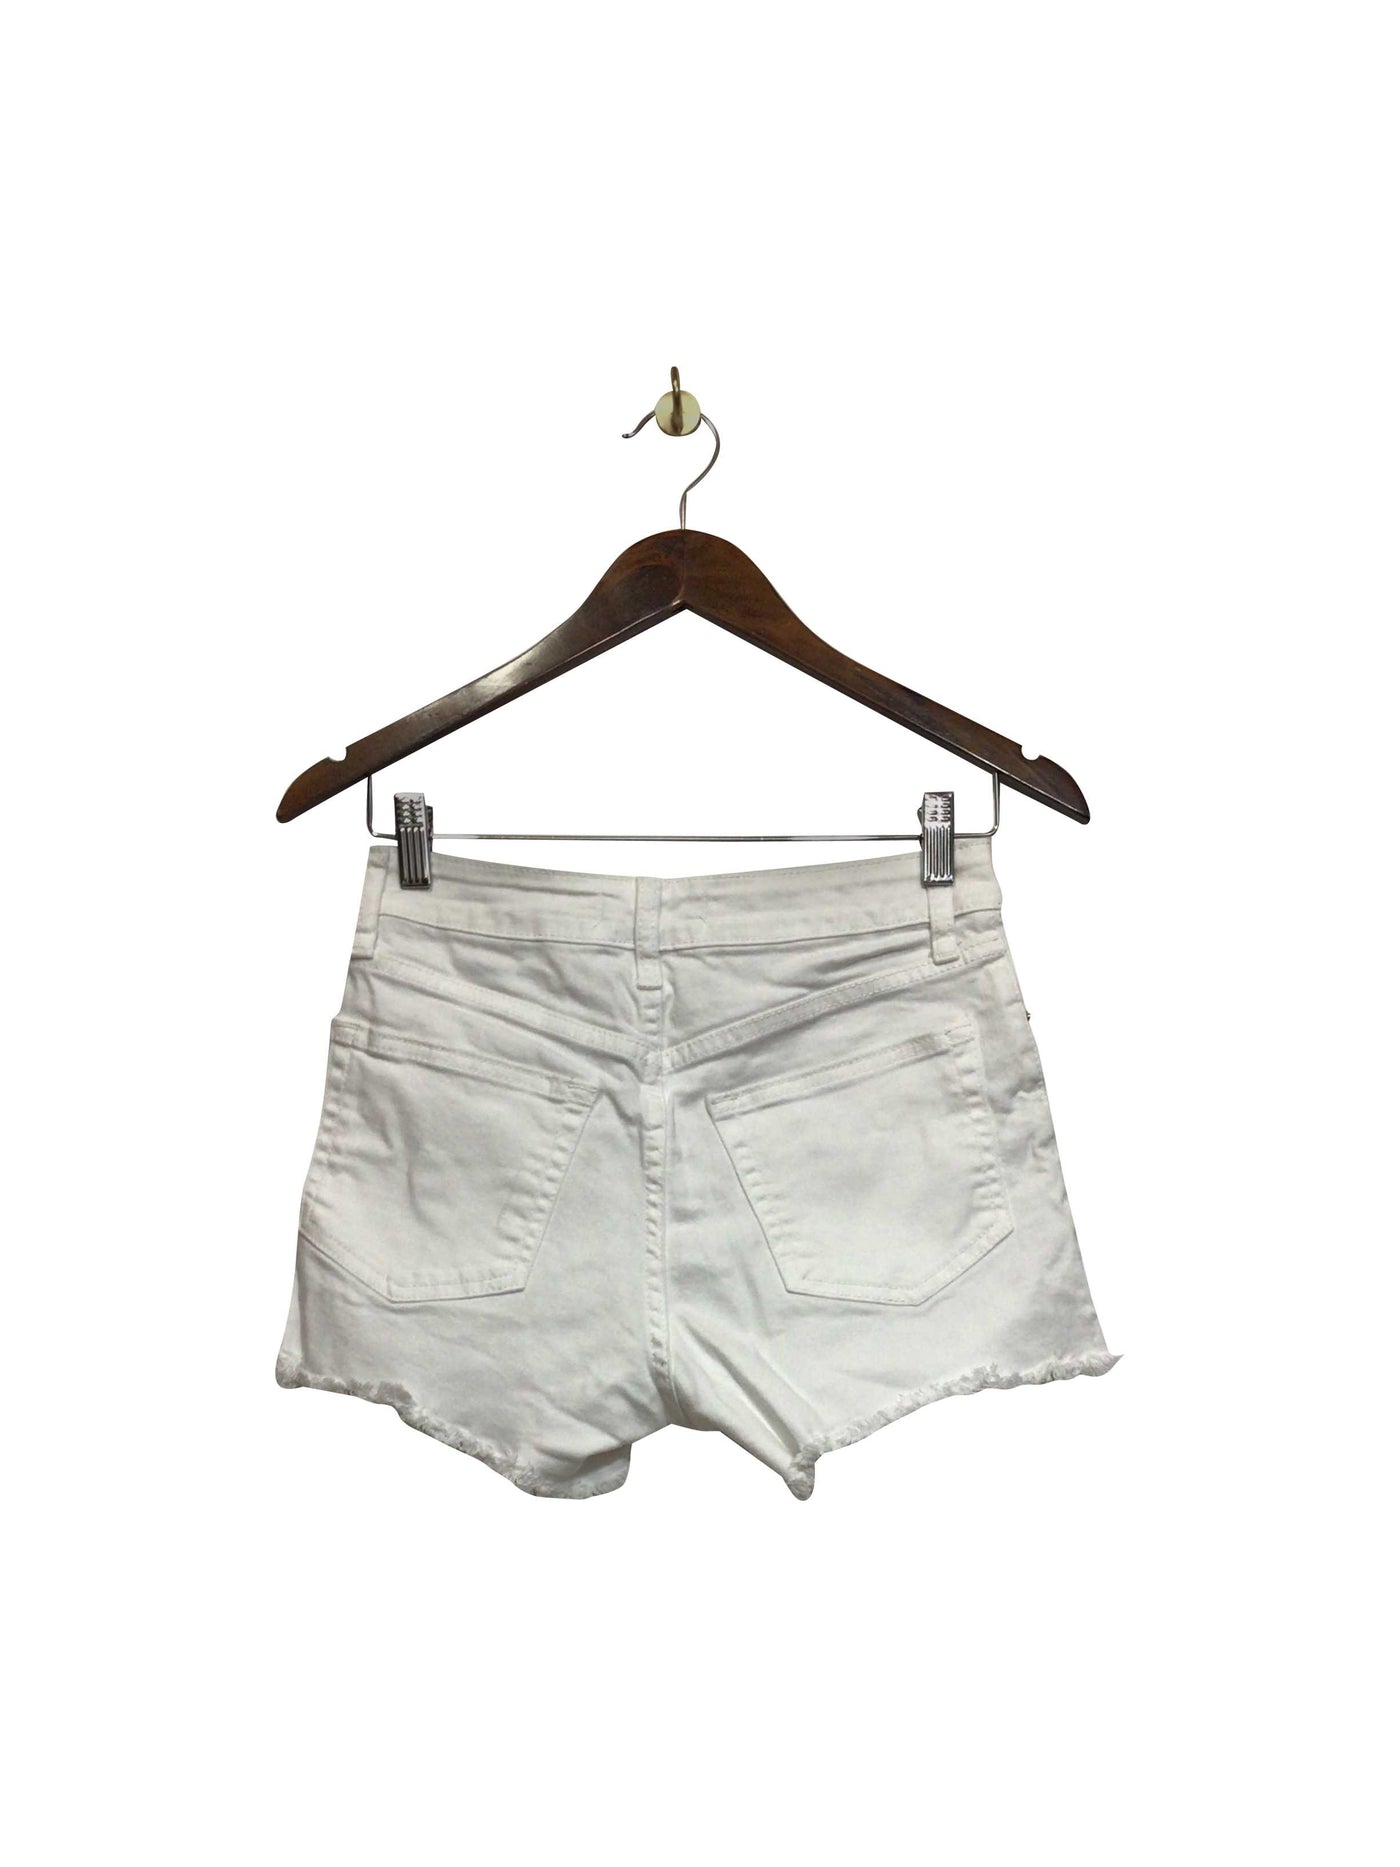 JUST USA Regular fit Jean Shorts in White  -  XS  11.34 Koop